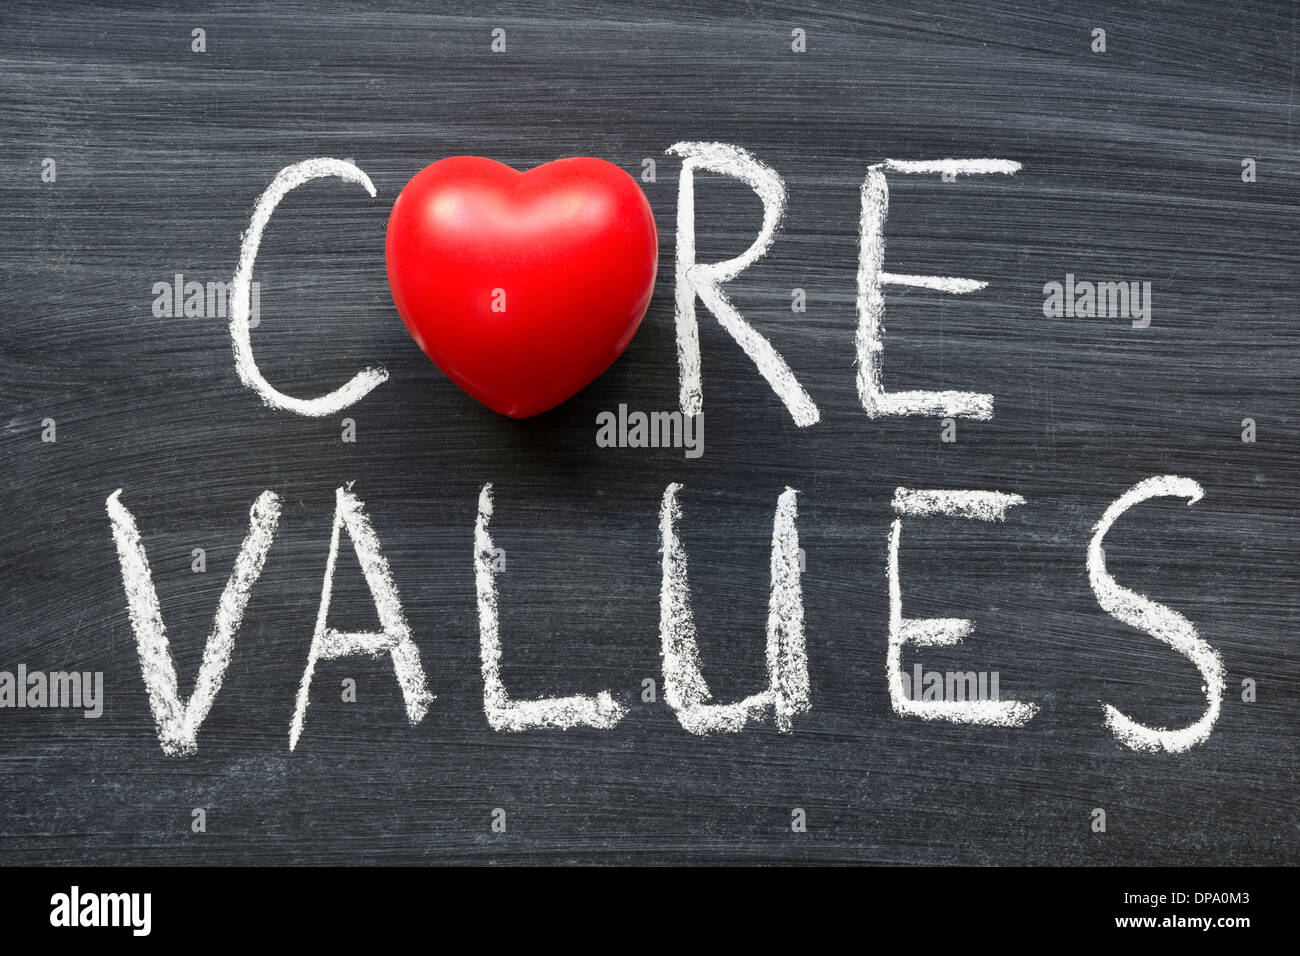 core values phrase handwritten on the school blackboard Stock Photo